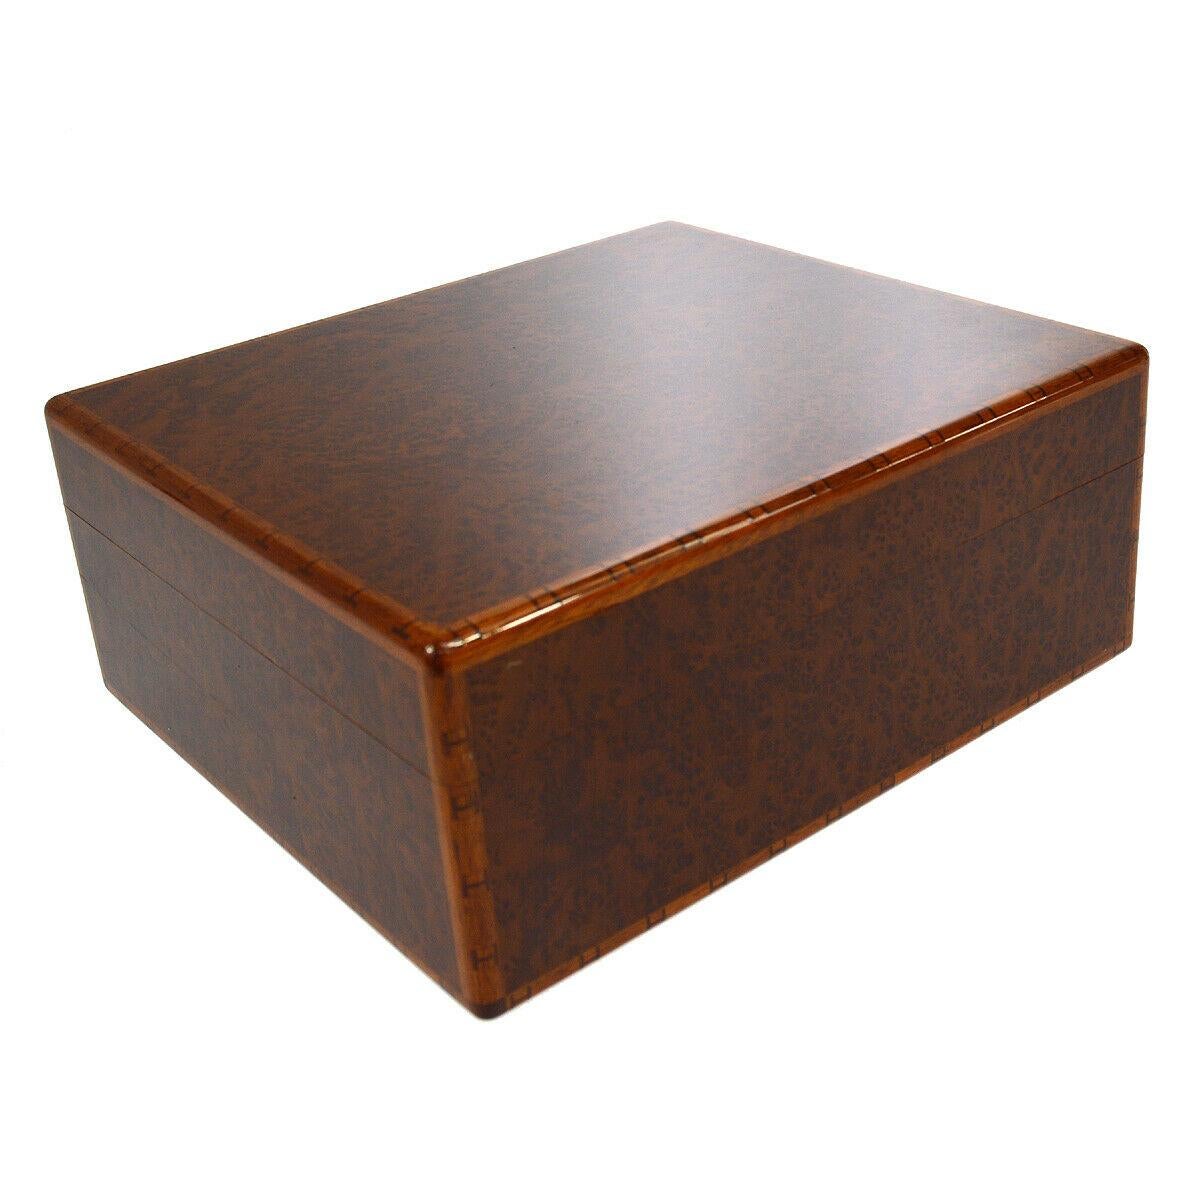 Hermes Laminate Wood Cigar Cigarette Humidor 'H' Logo Men's Storage Box Case

Wood
Laminate
Gold hardware
Measures 10